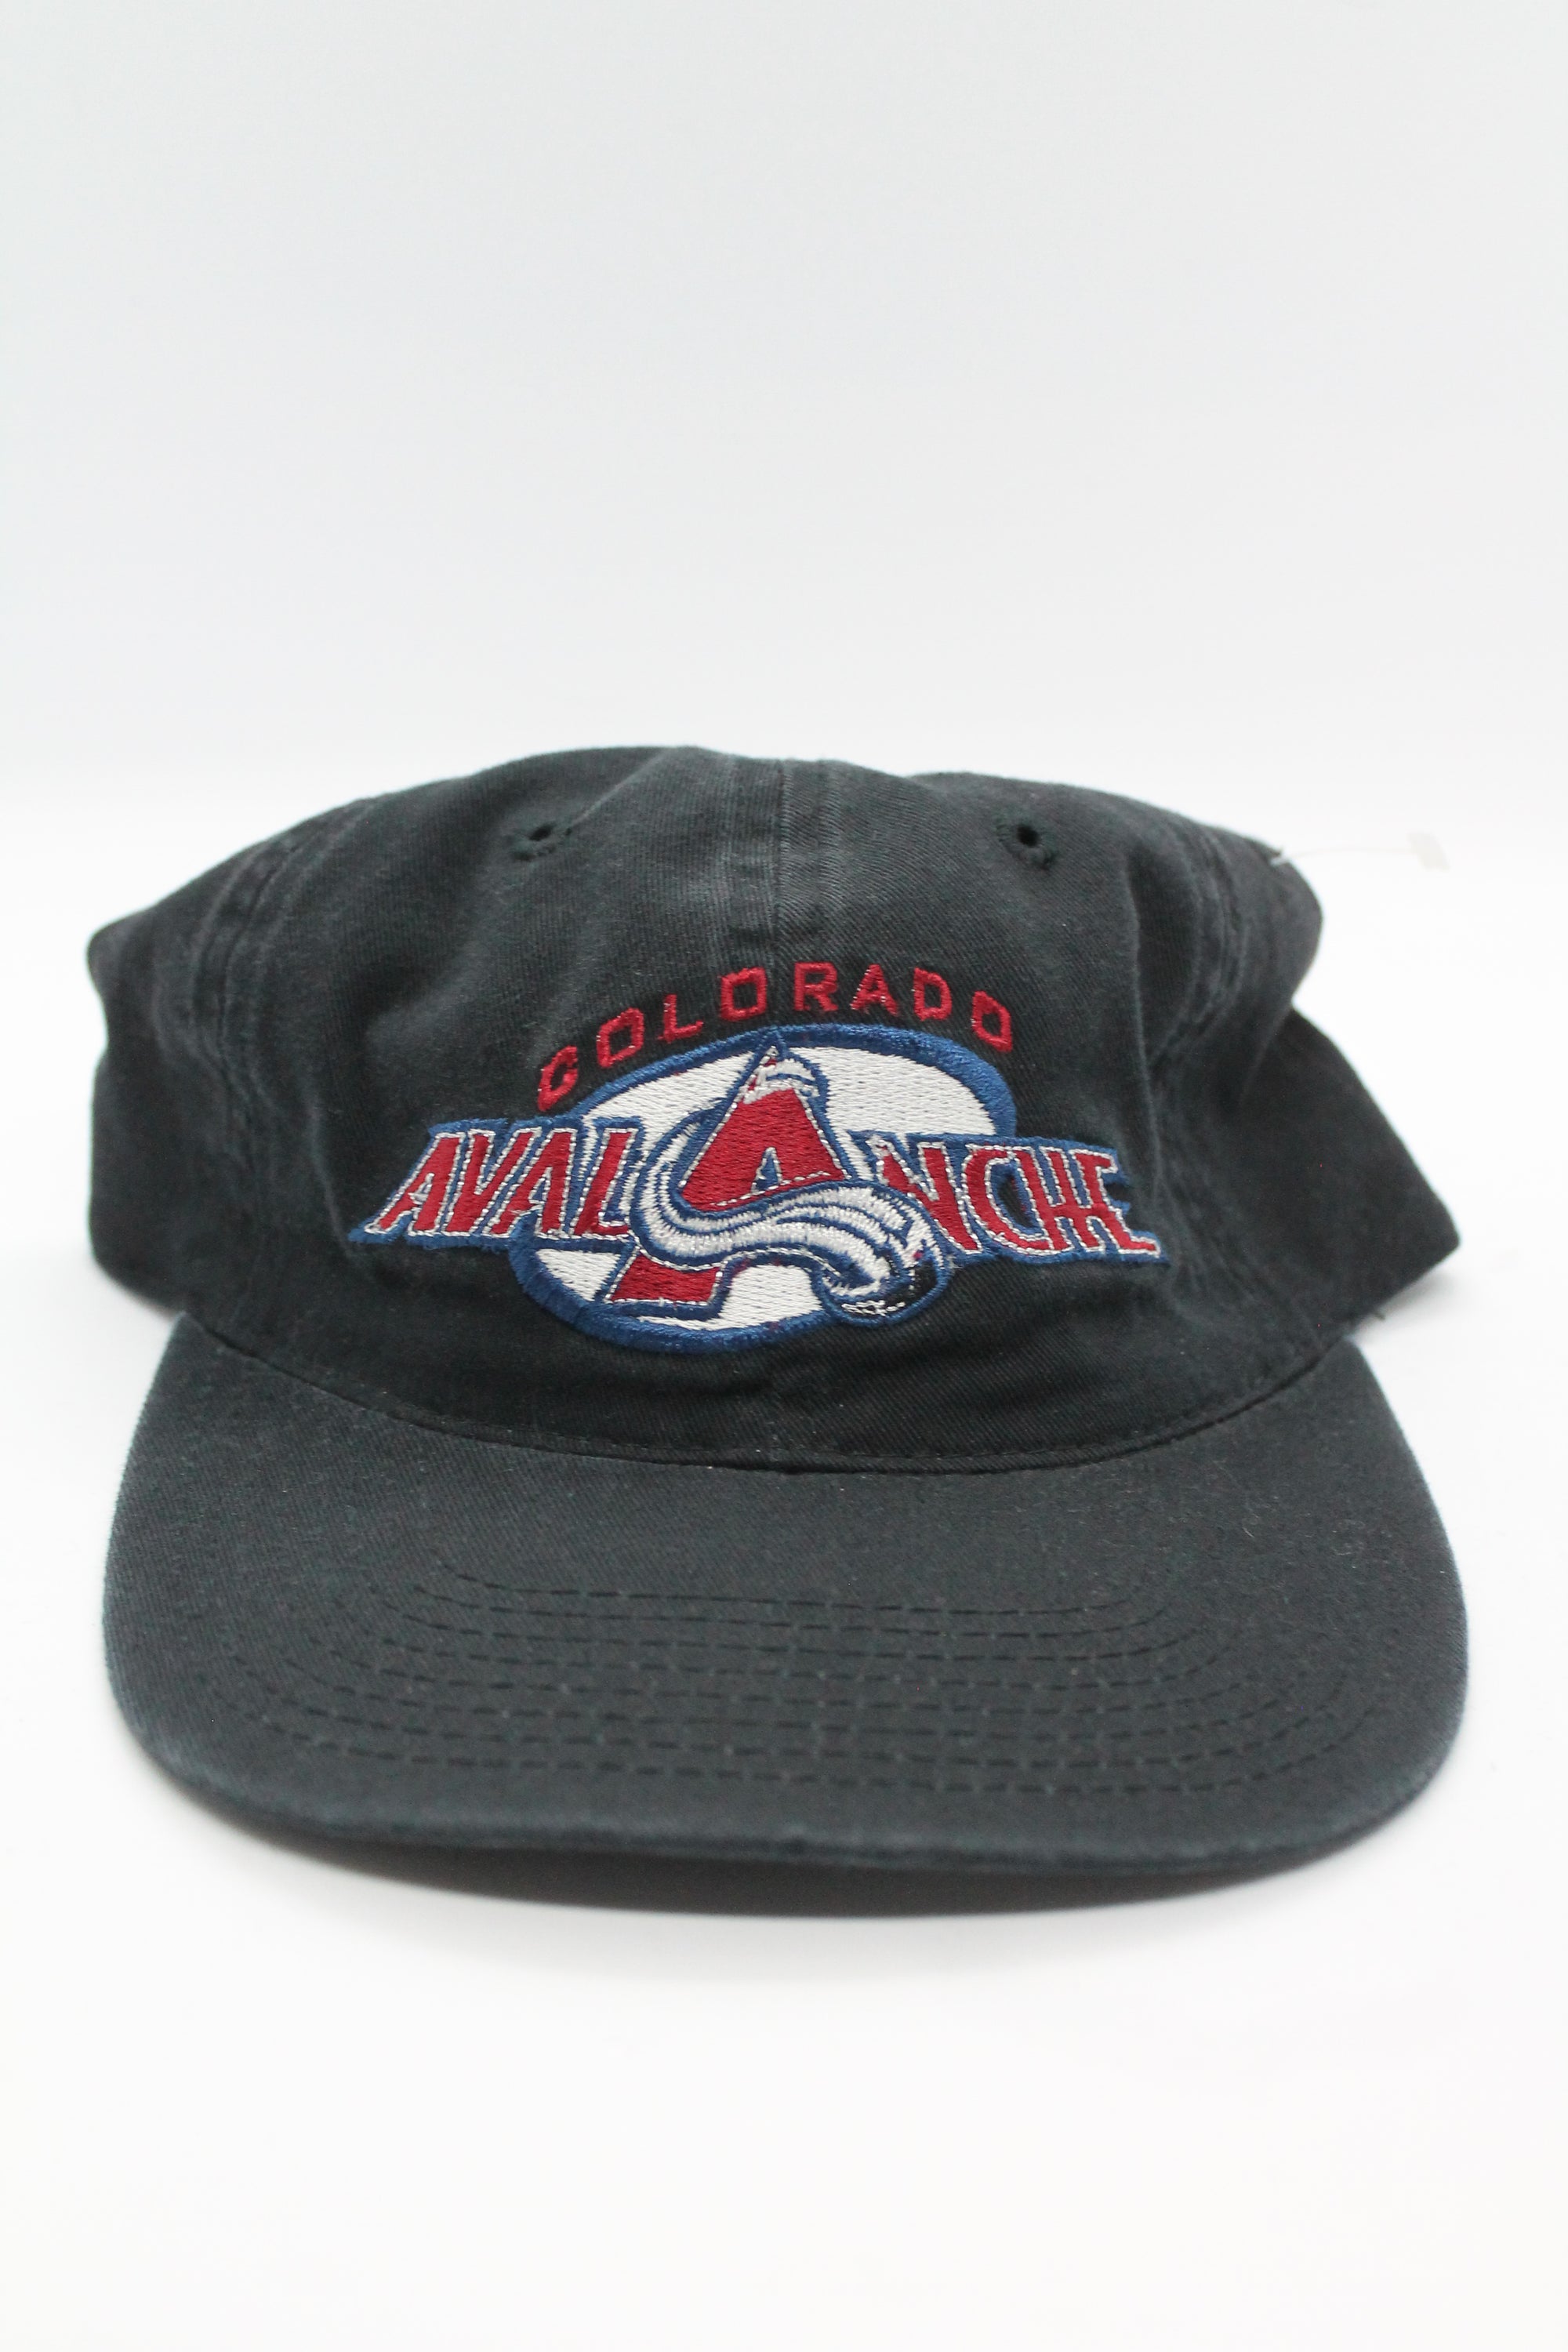 Colorado Avalanche Classic NHL baseball hat cap